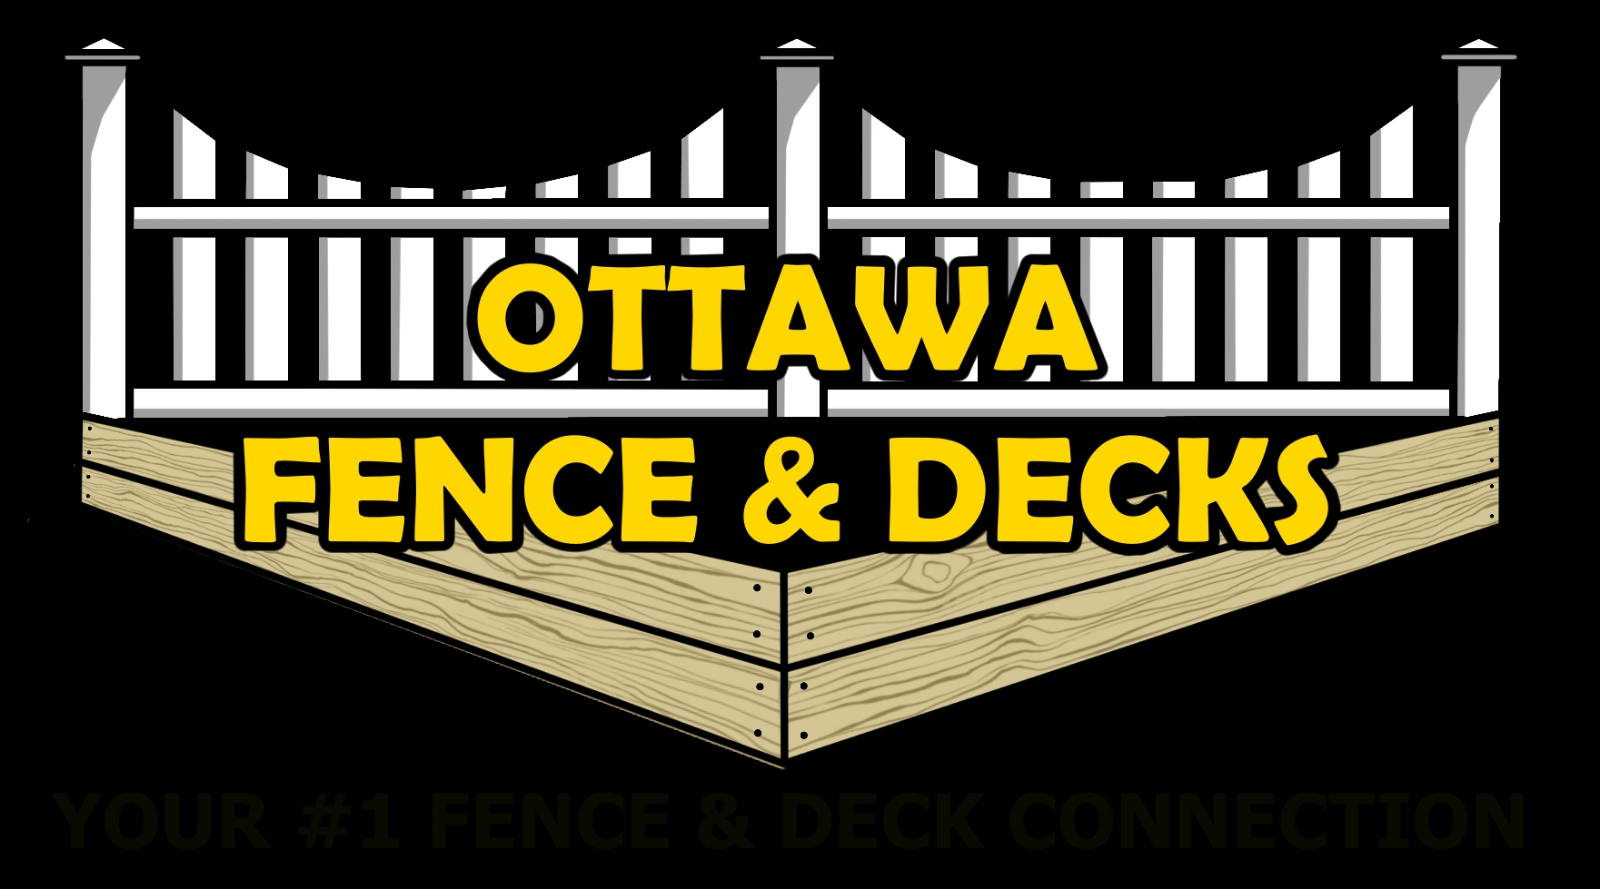 Ottawa Fence and Decks